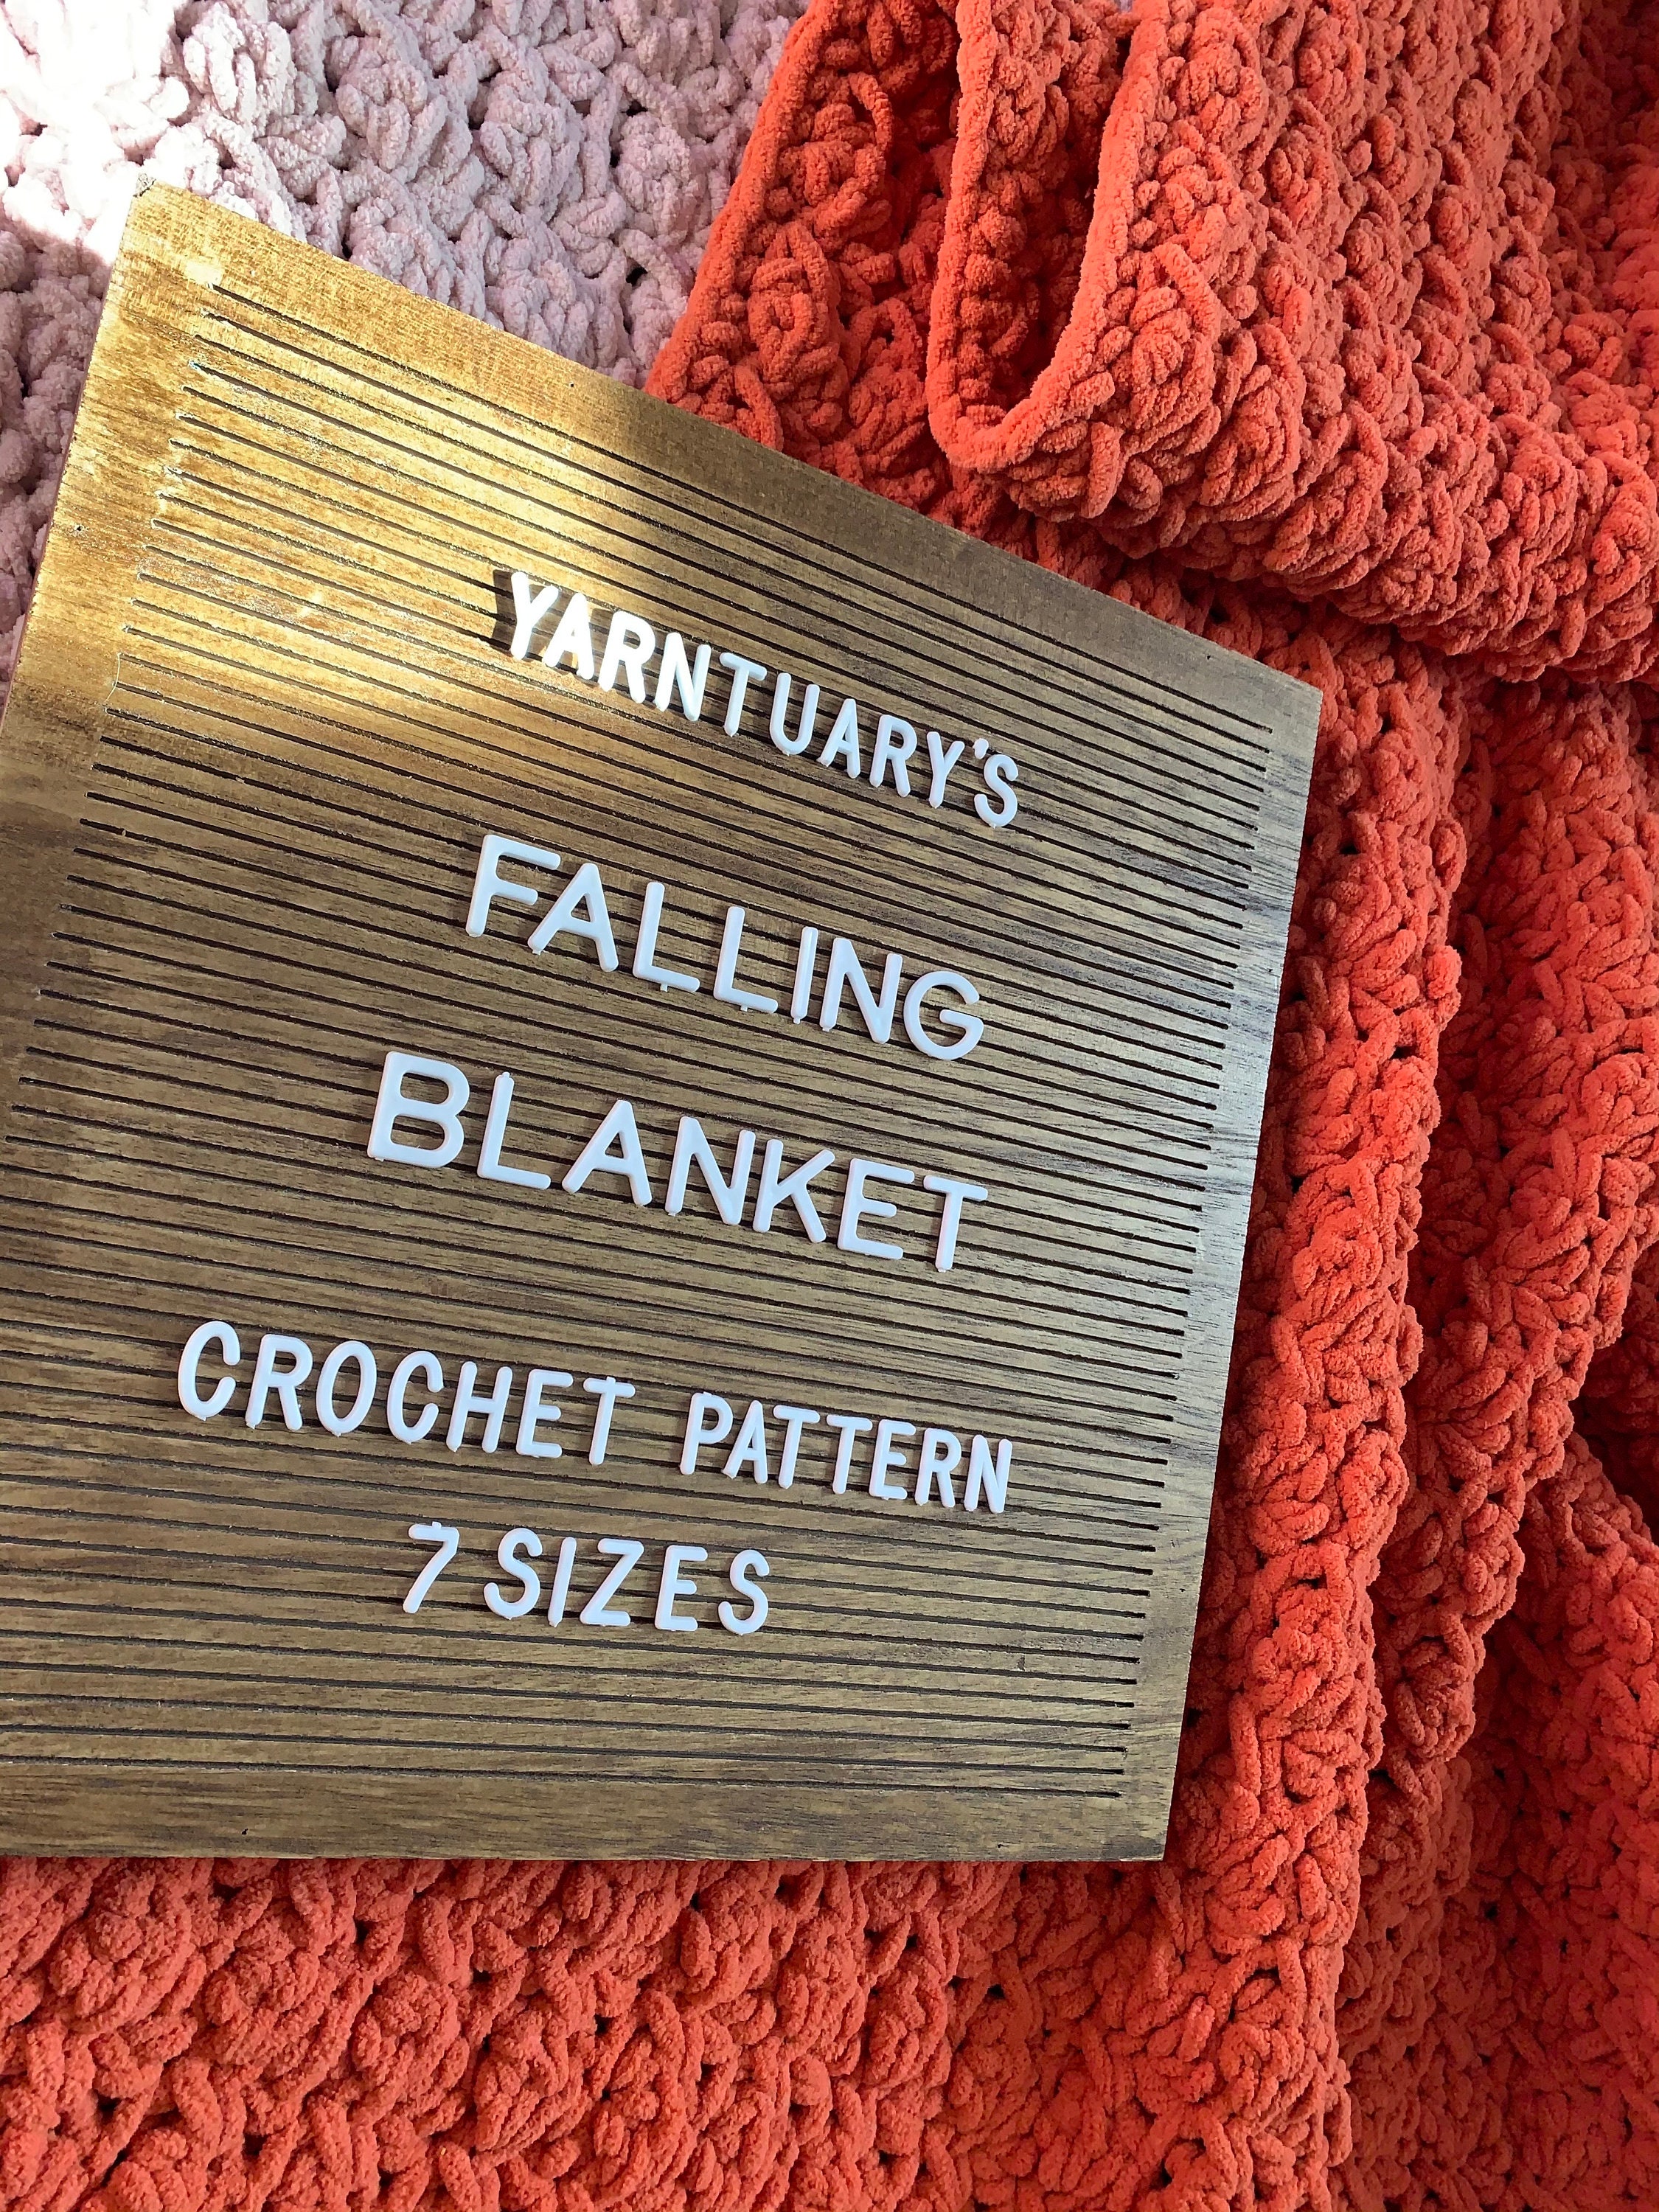 Bernat Blanket Afghan Pattern, Mint Choco Chip Blanket - Crochet